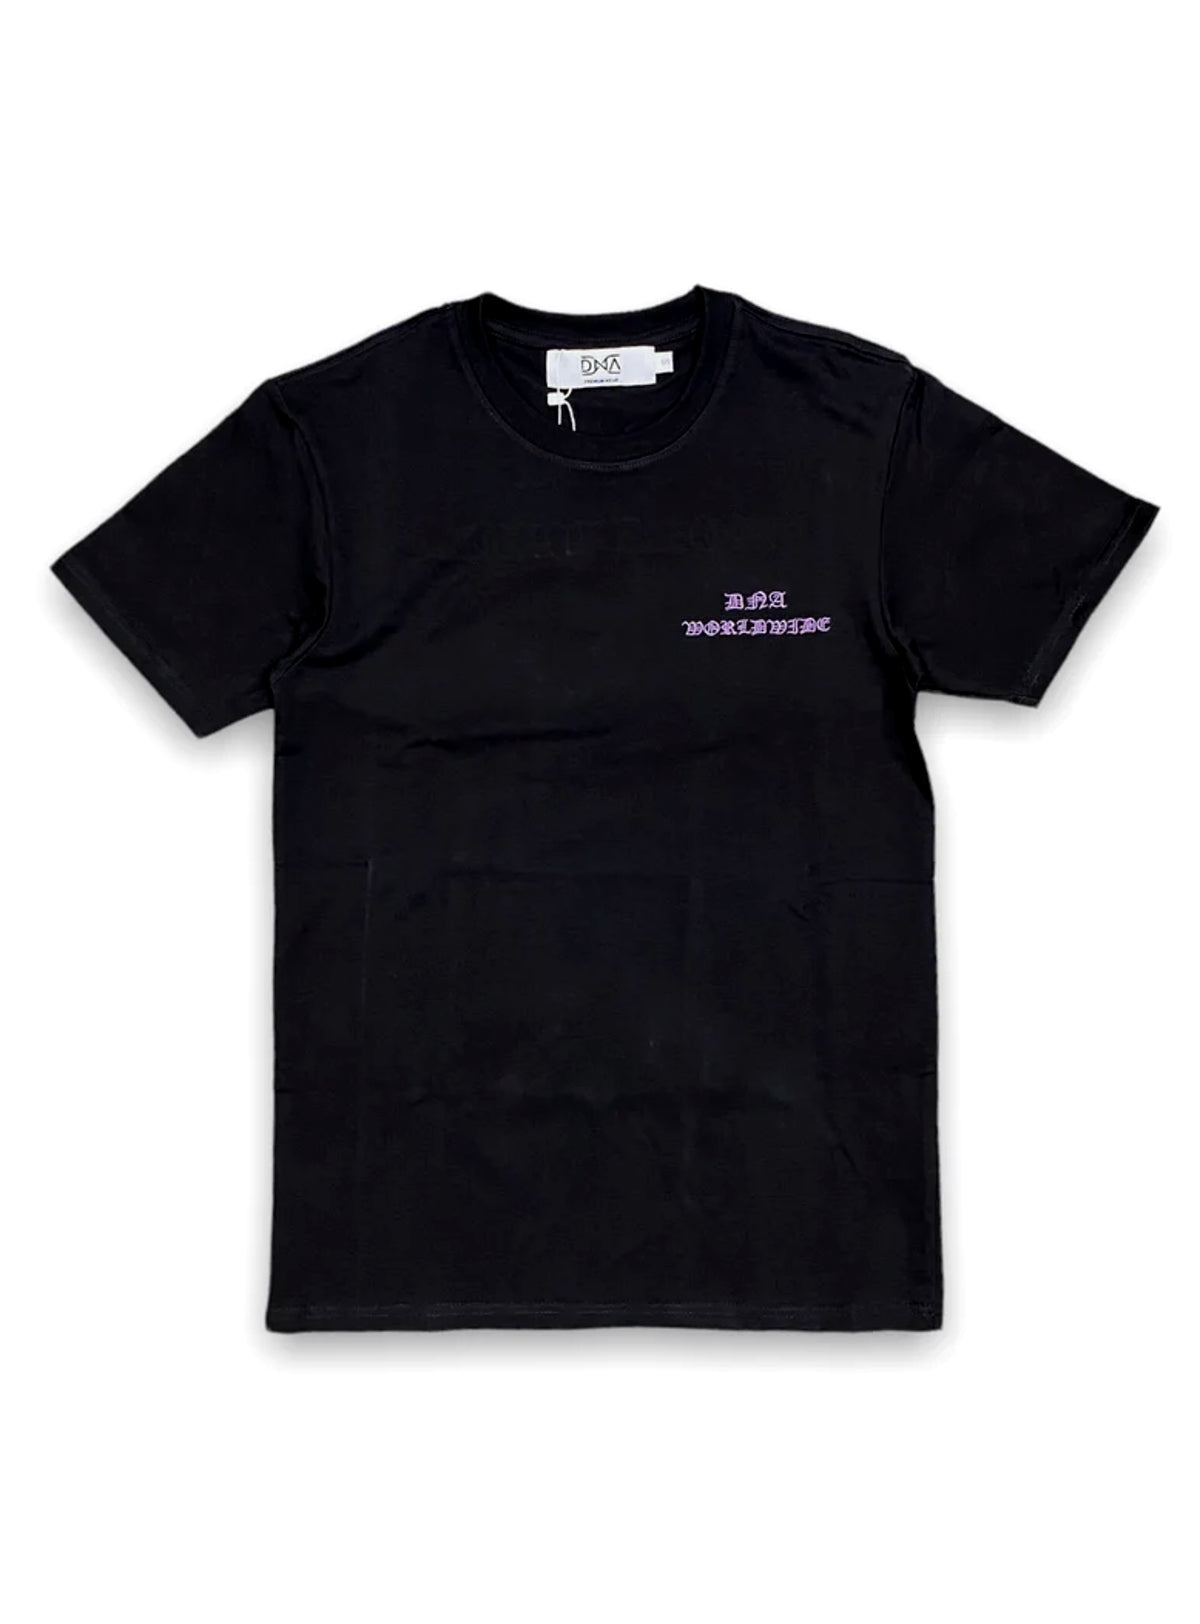 Black cotton T-shirt - PURPLE BRAND - Mariodannashop